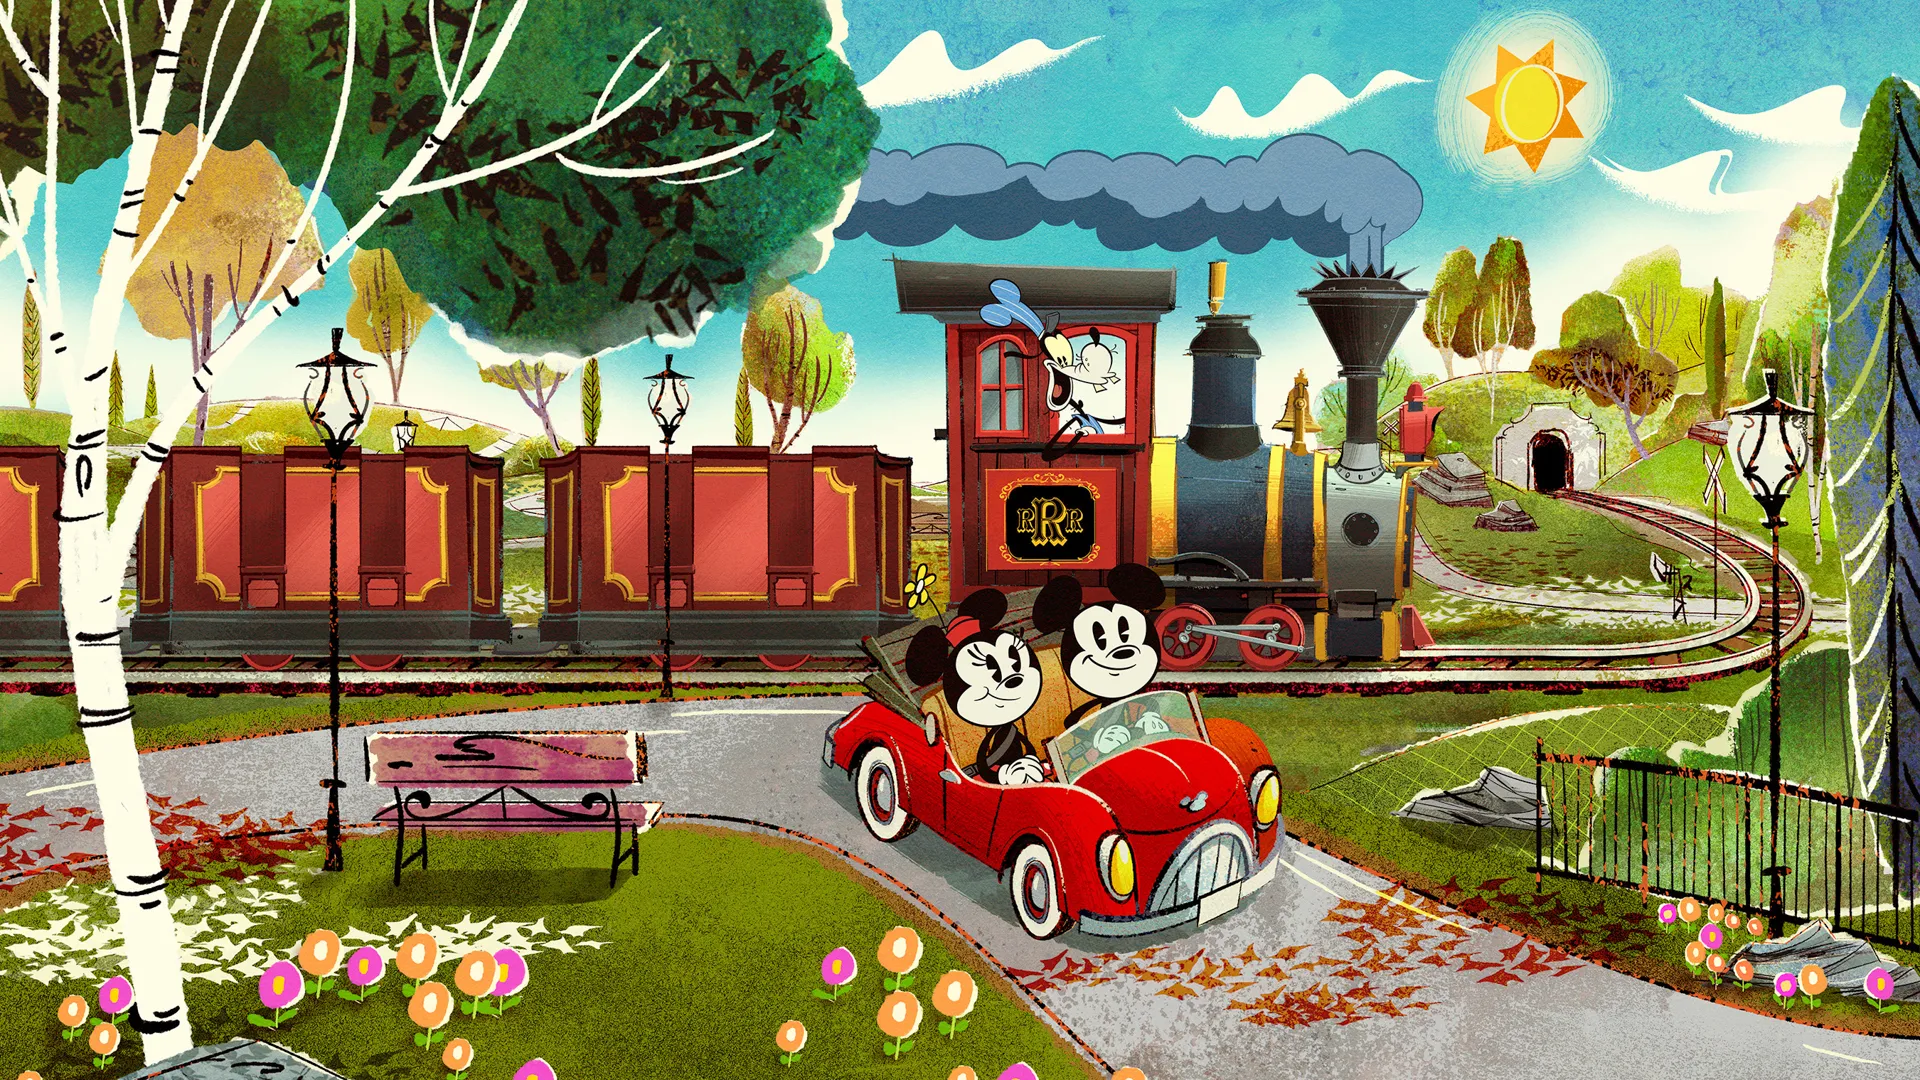 Micke and Minnie's Runaway Railway at Walt Disney World Resort concept art